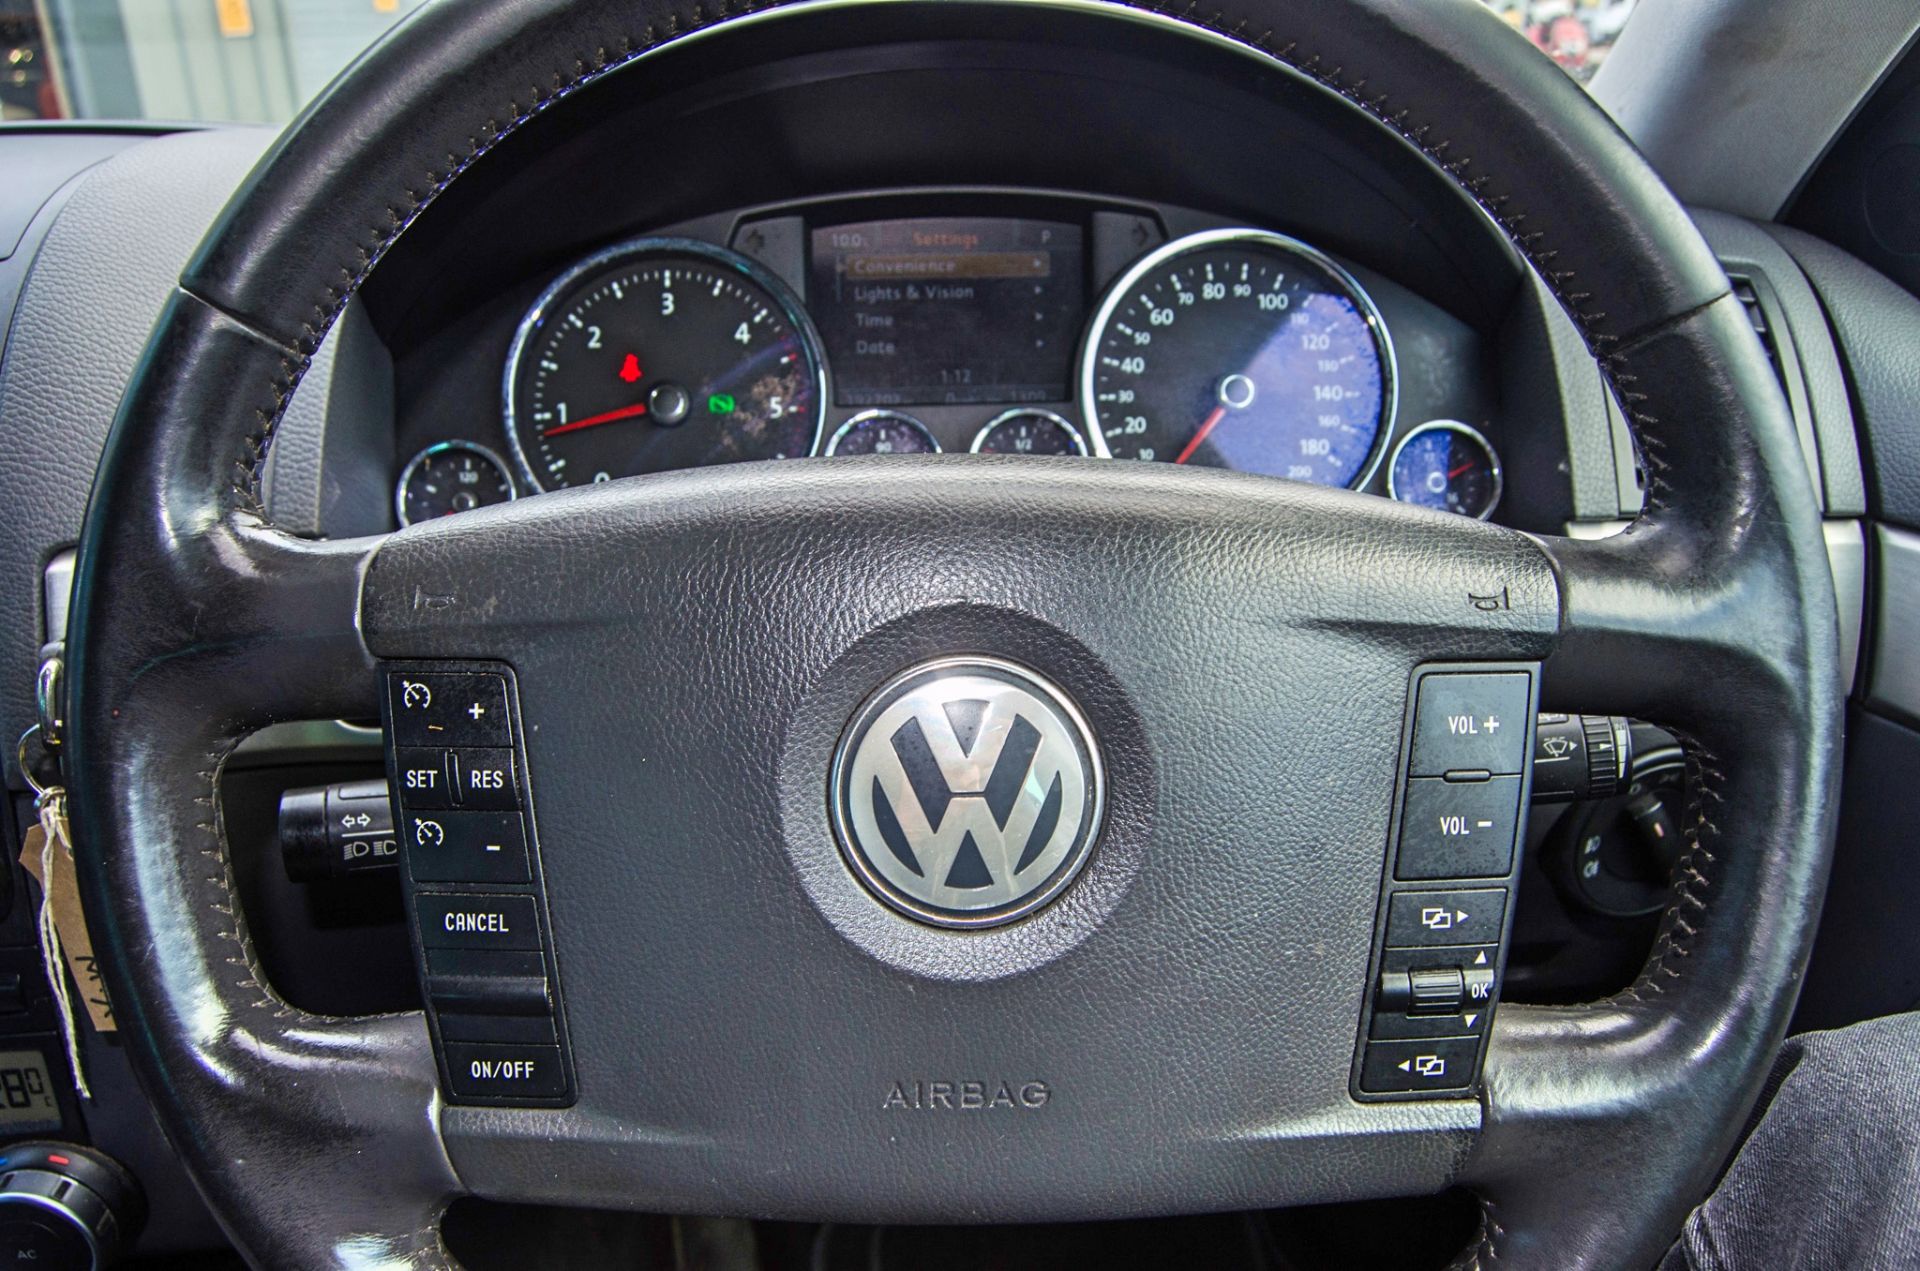 Volkswagen Touareg Altitude V6 2967cc TDi automatic 5 door estate car Registration Number: MF10 - Image 31 of 37